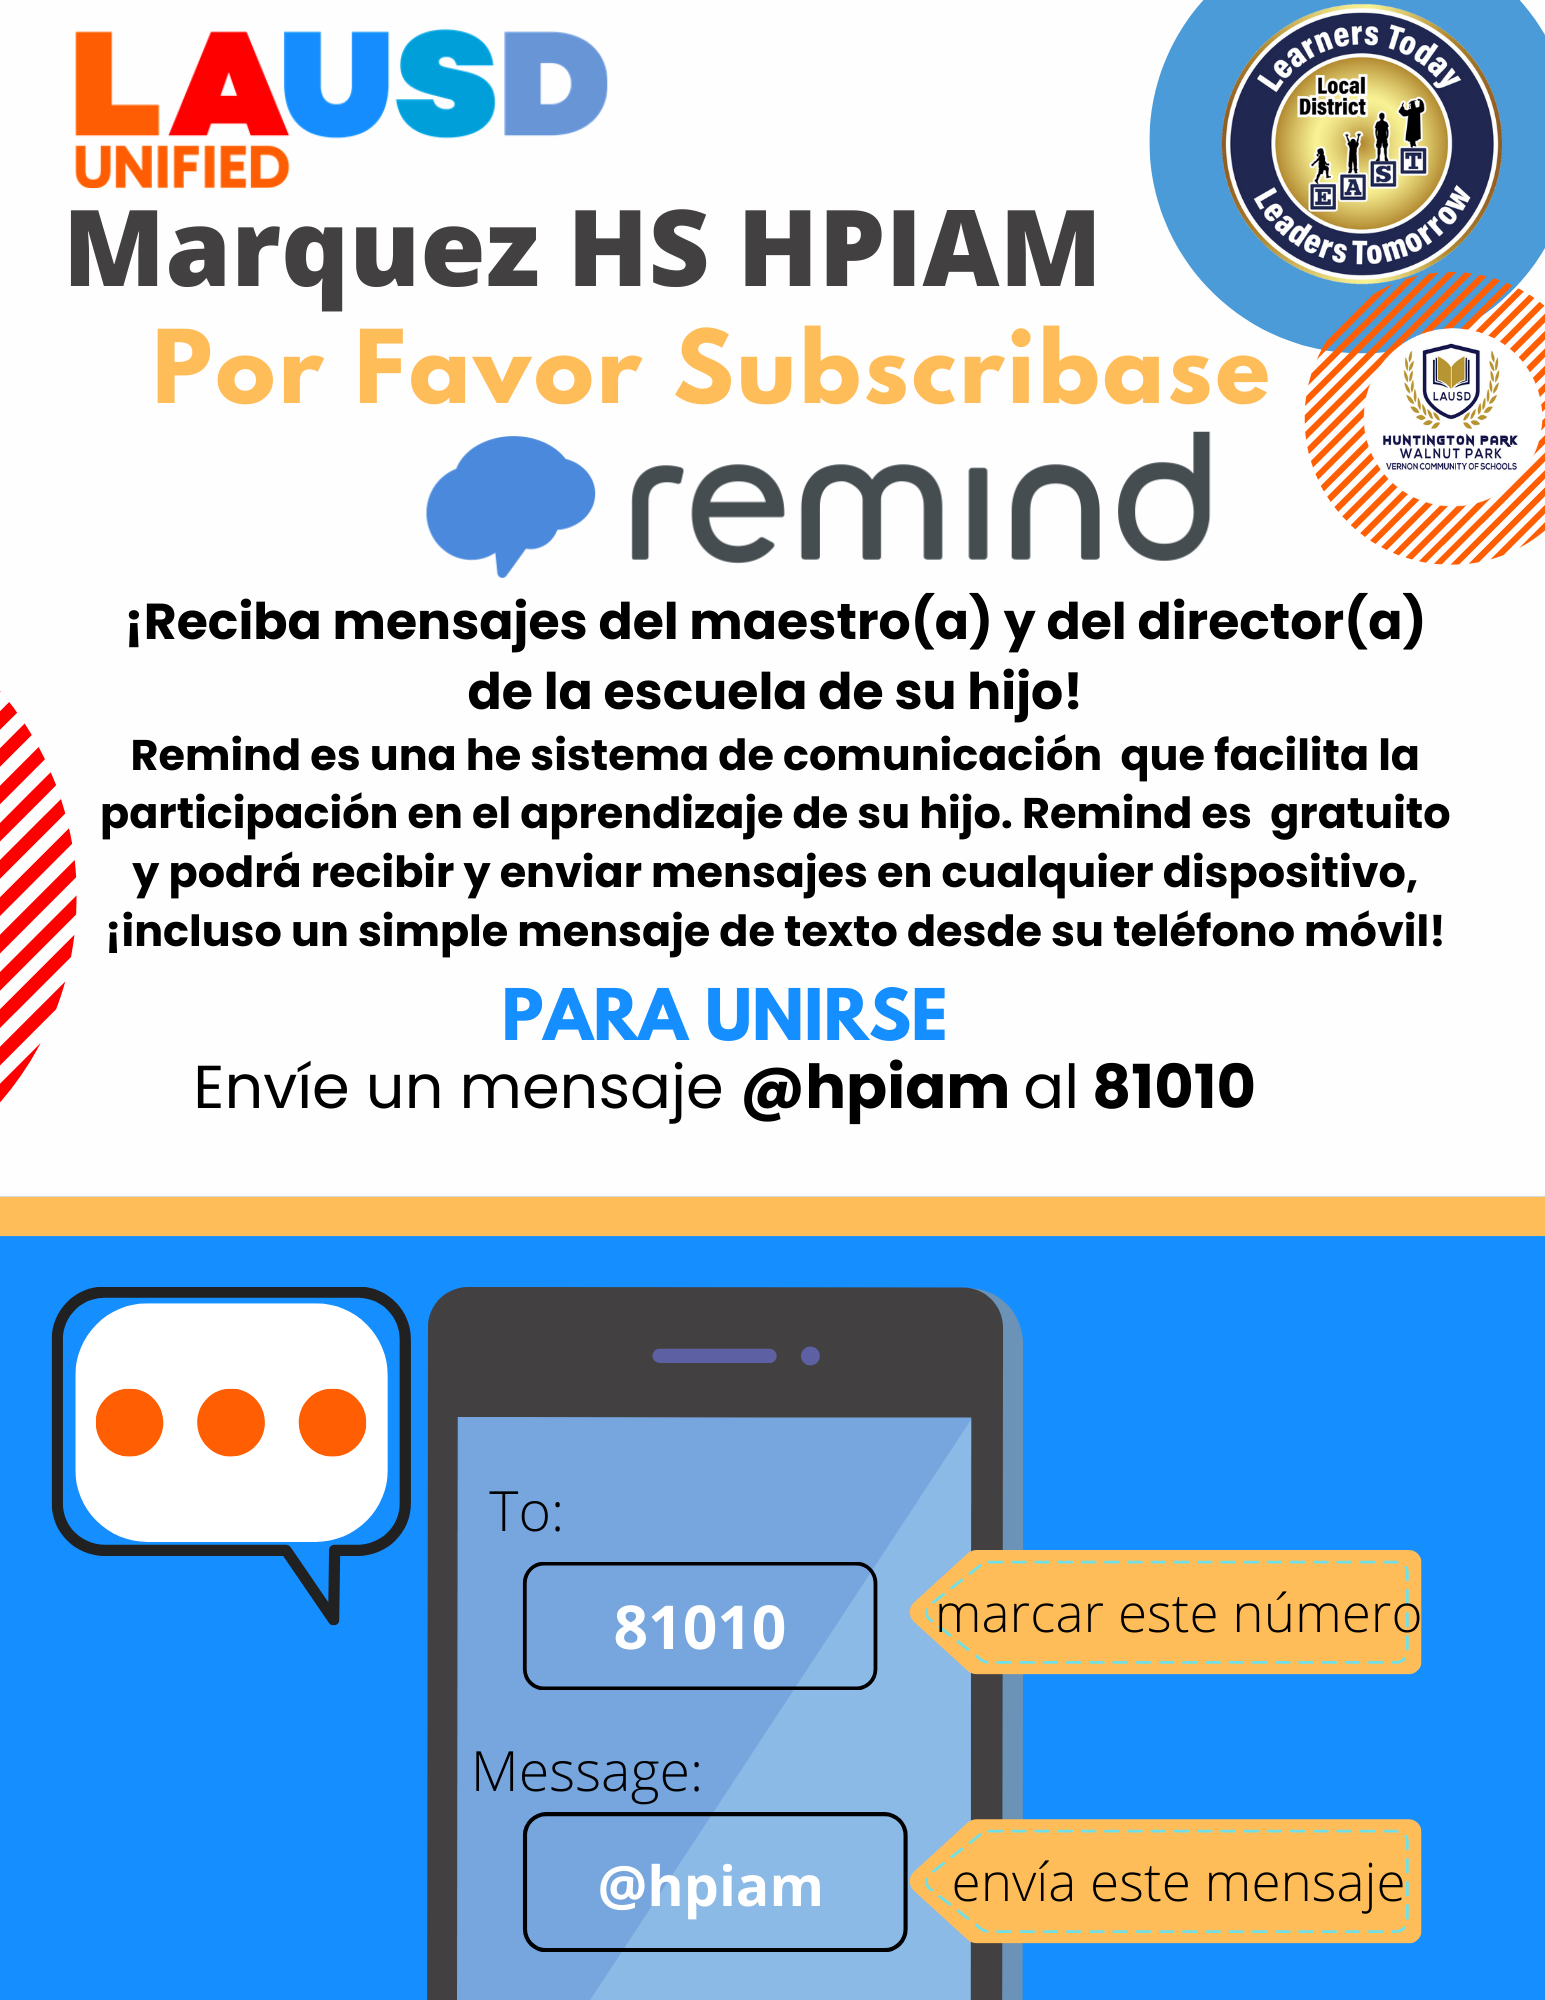 Remind Subscription Information - Spanish